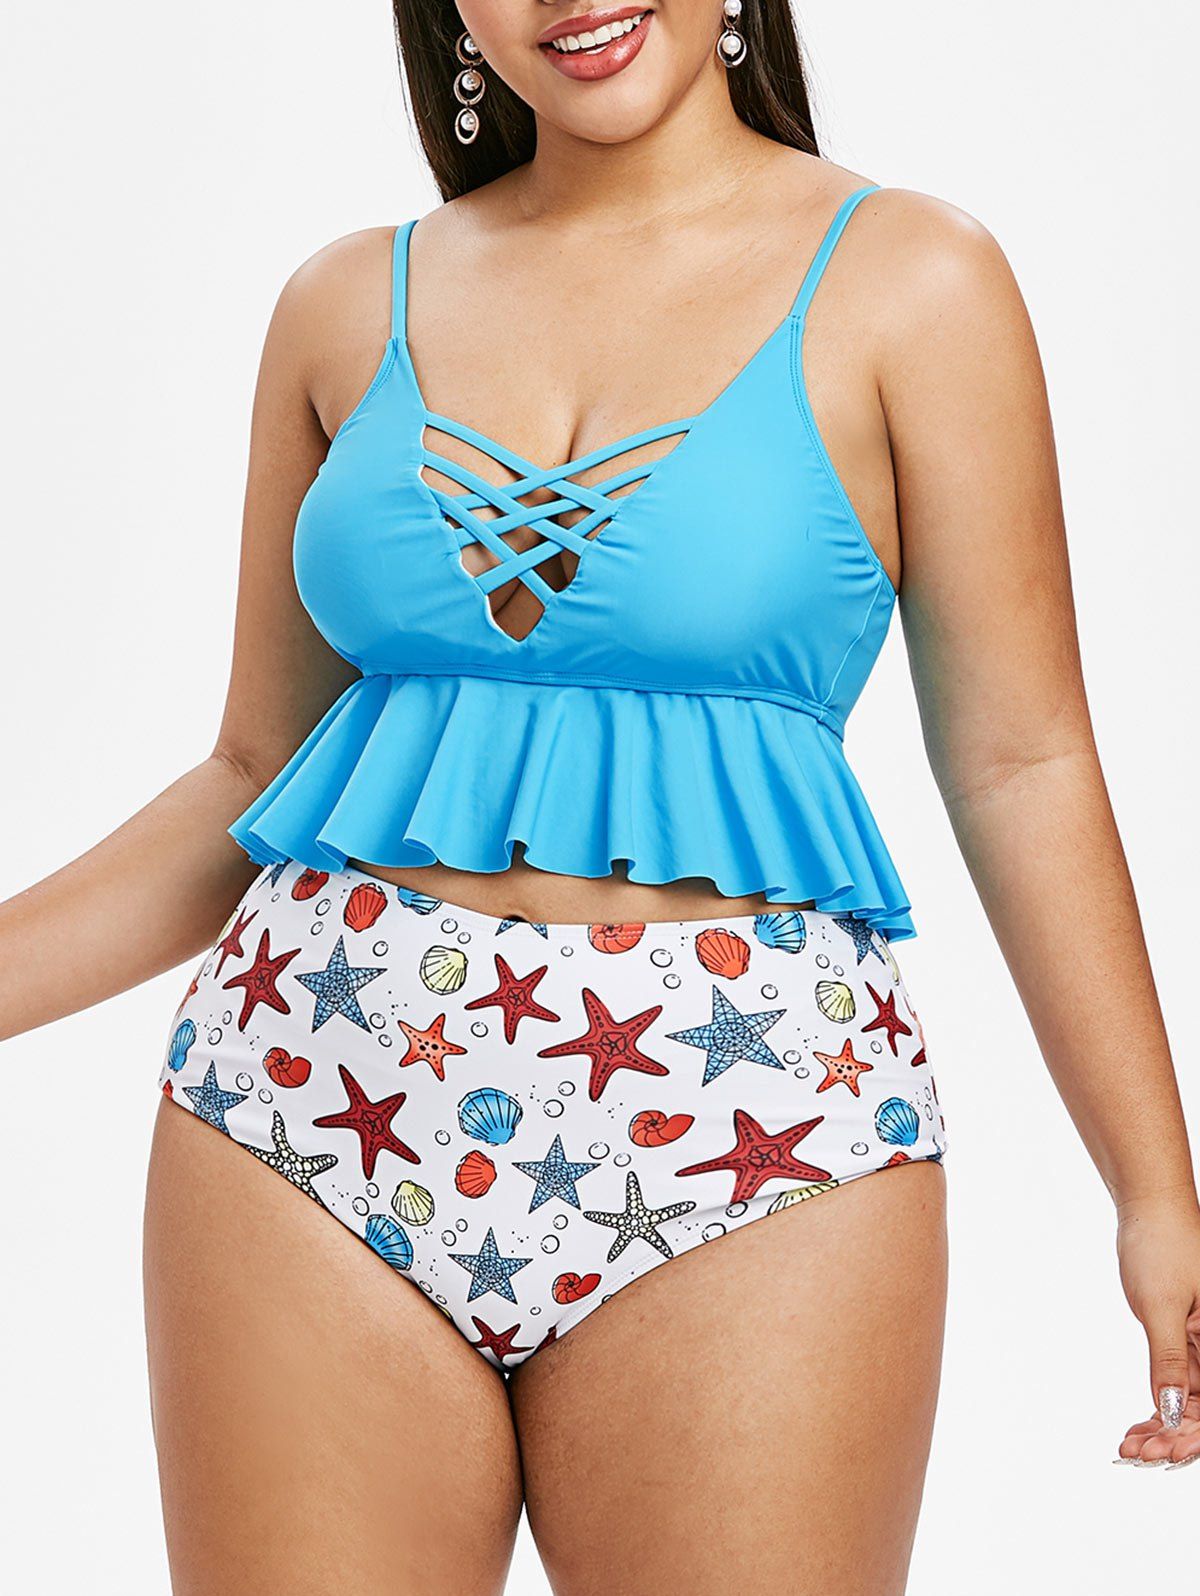 Plus Size Crisscross Starfish Printed Cami Tankini Swimsuit - DEEP SKY BLUE 5X